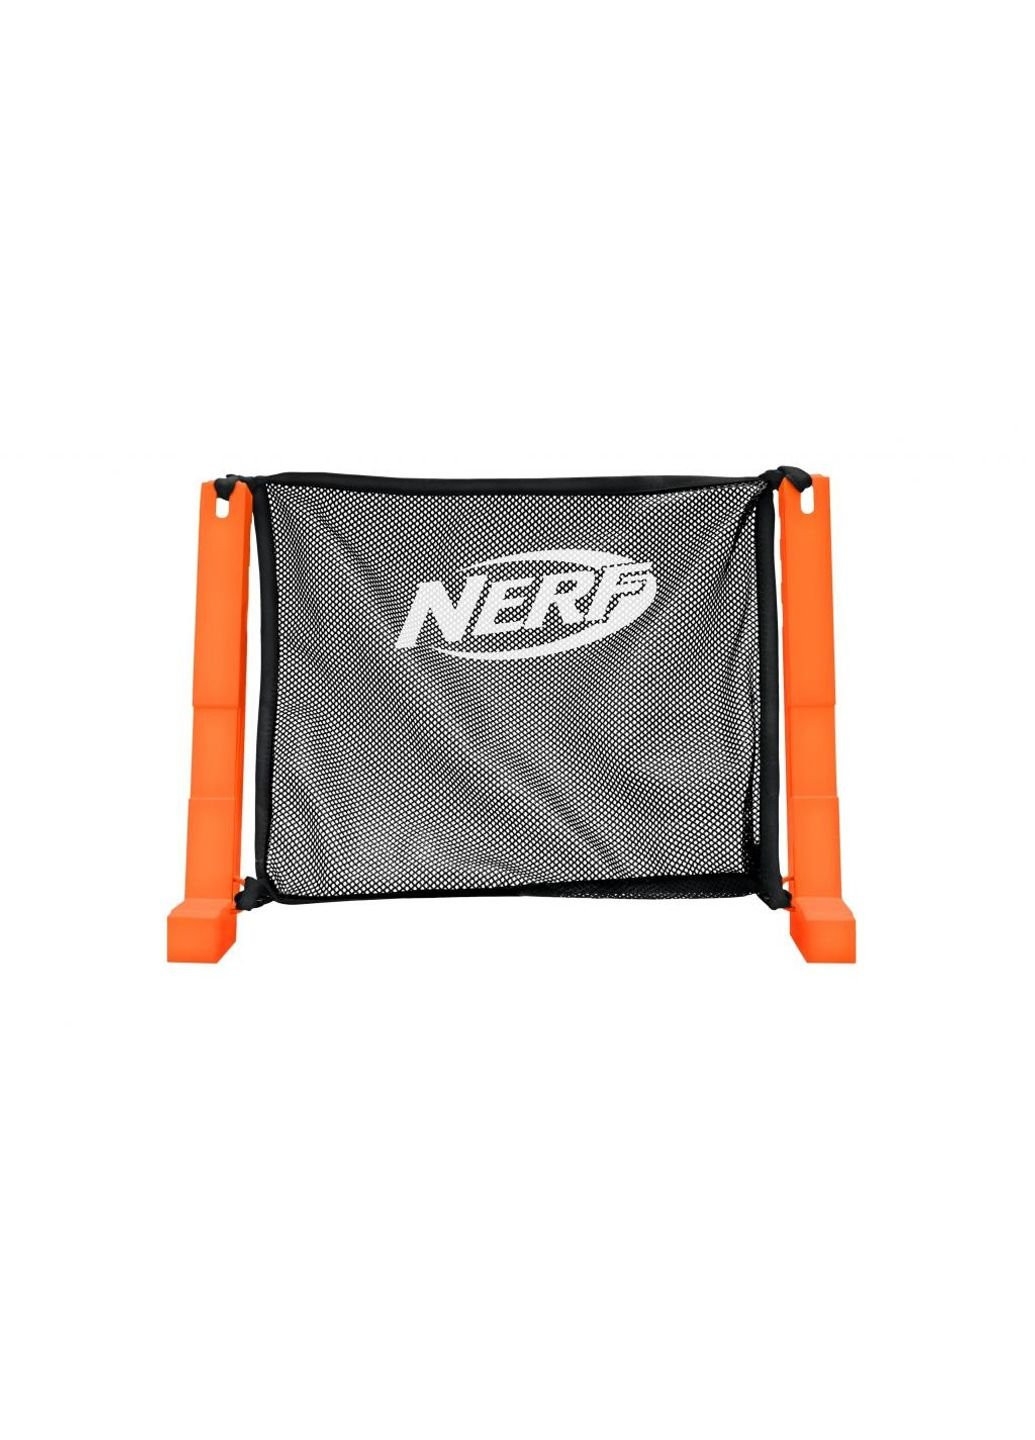 Іграшкова зброя Jazwares Nerf Nerf Elite Hovering Target (11510N) No Brand (254068173)